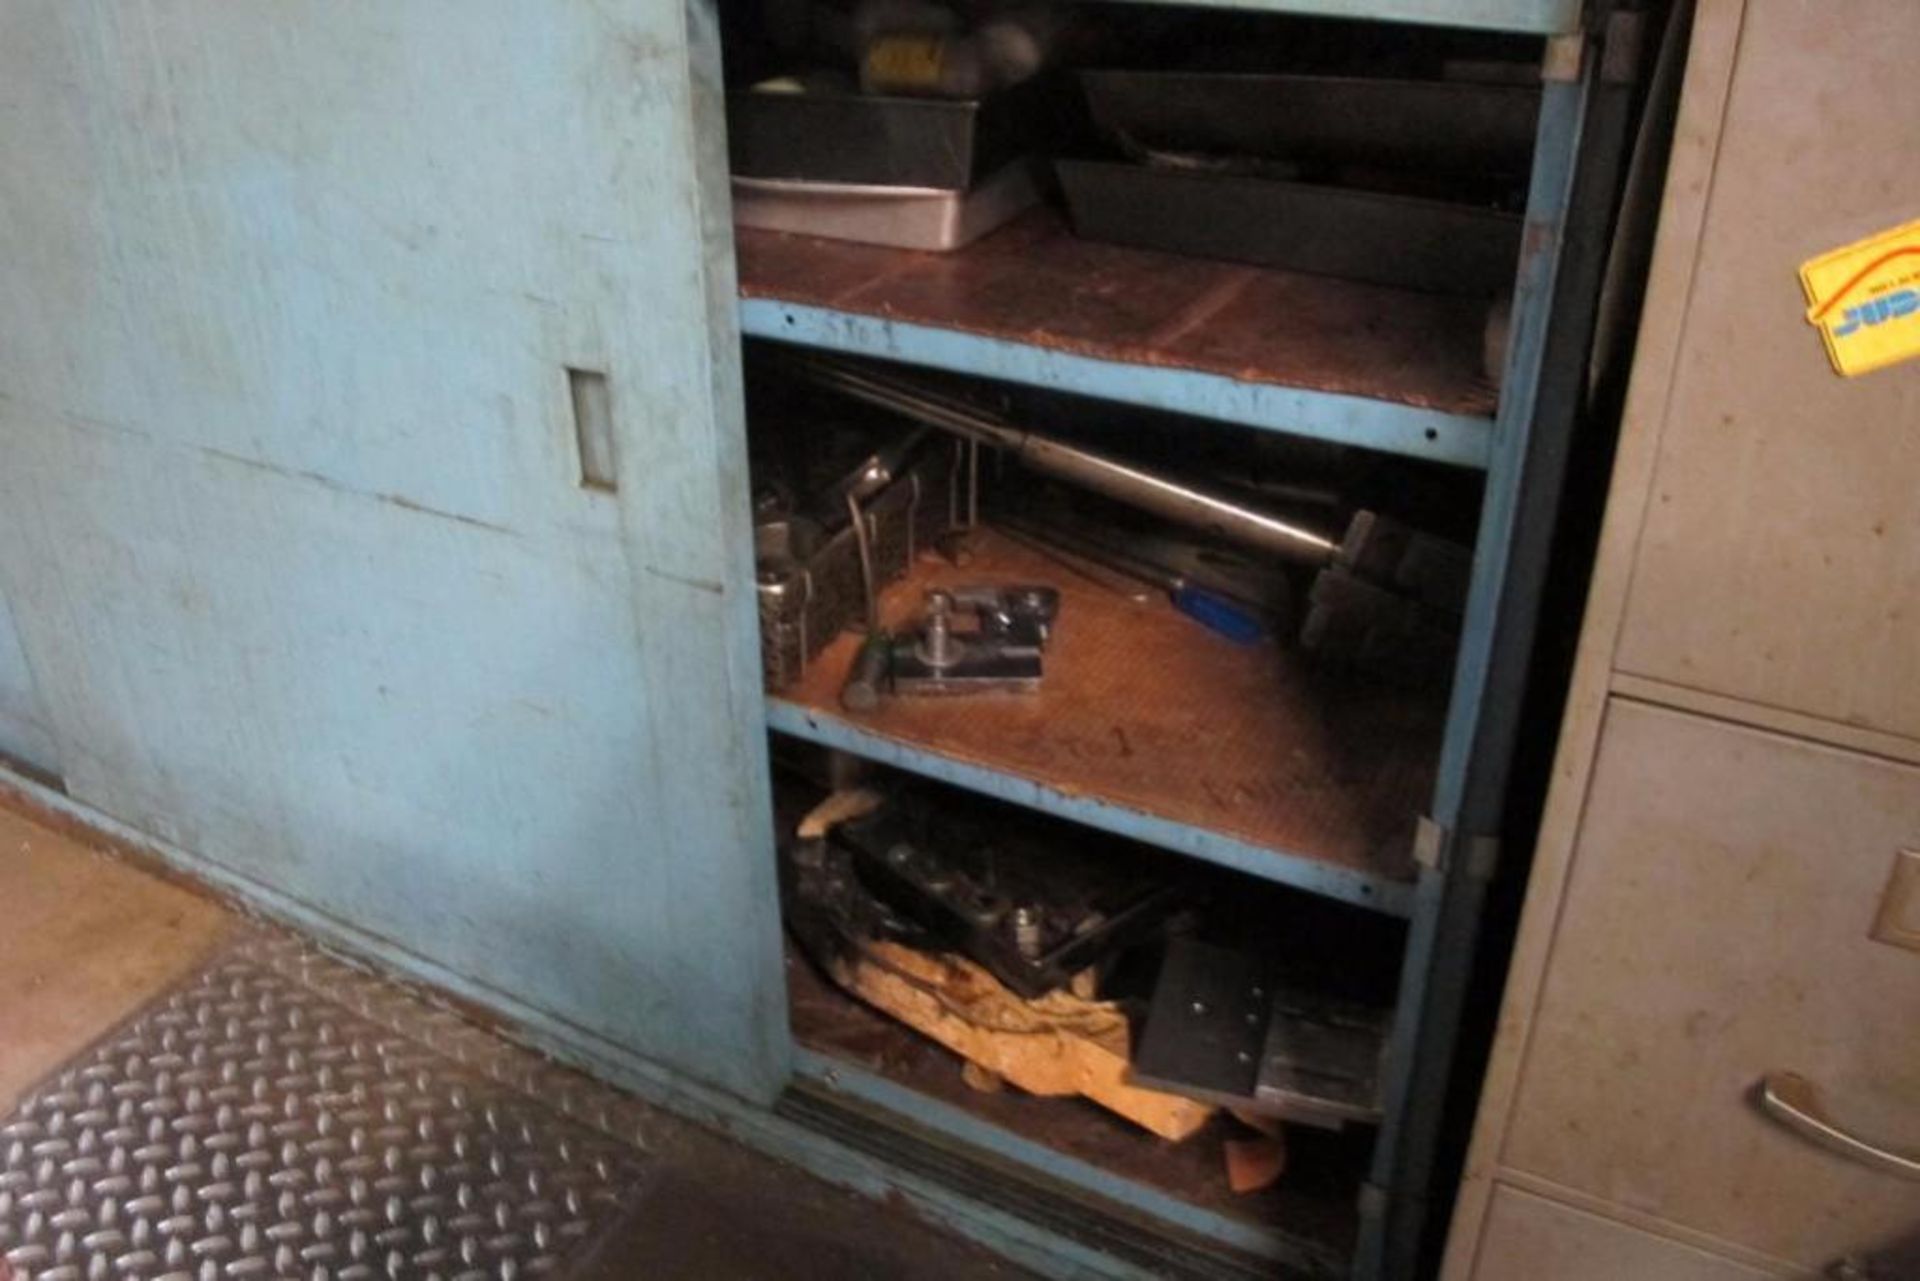 2-Door Production work bench W/ Screw Machine Spare Parts - Image 2 of 2